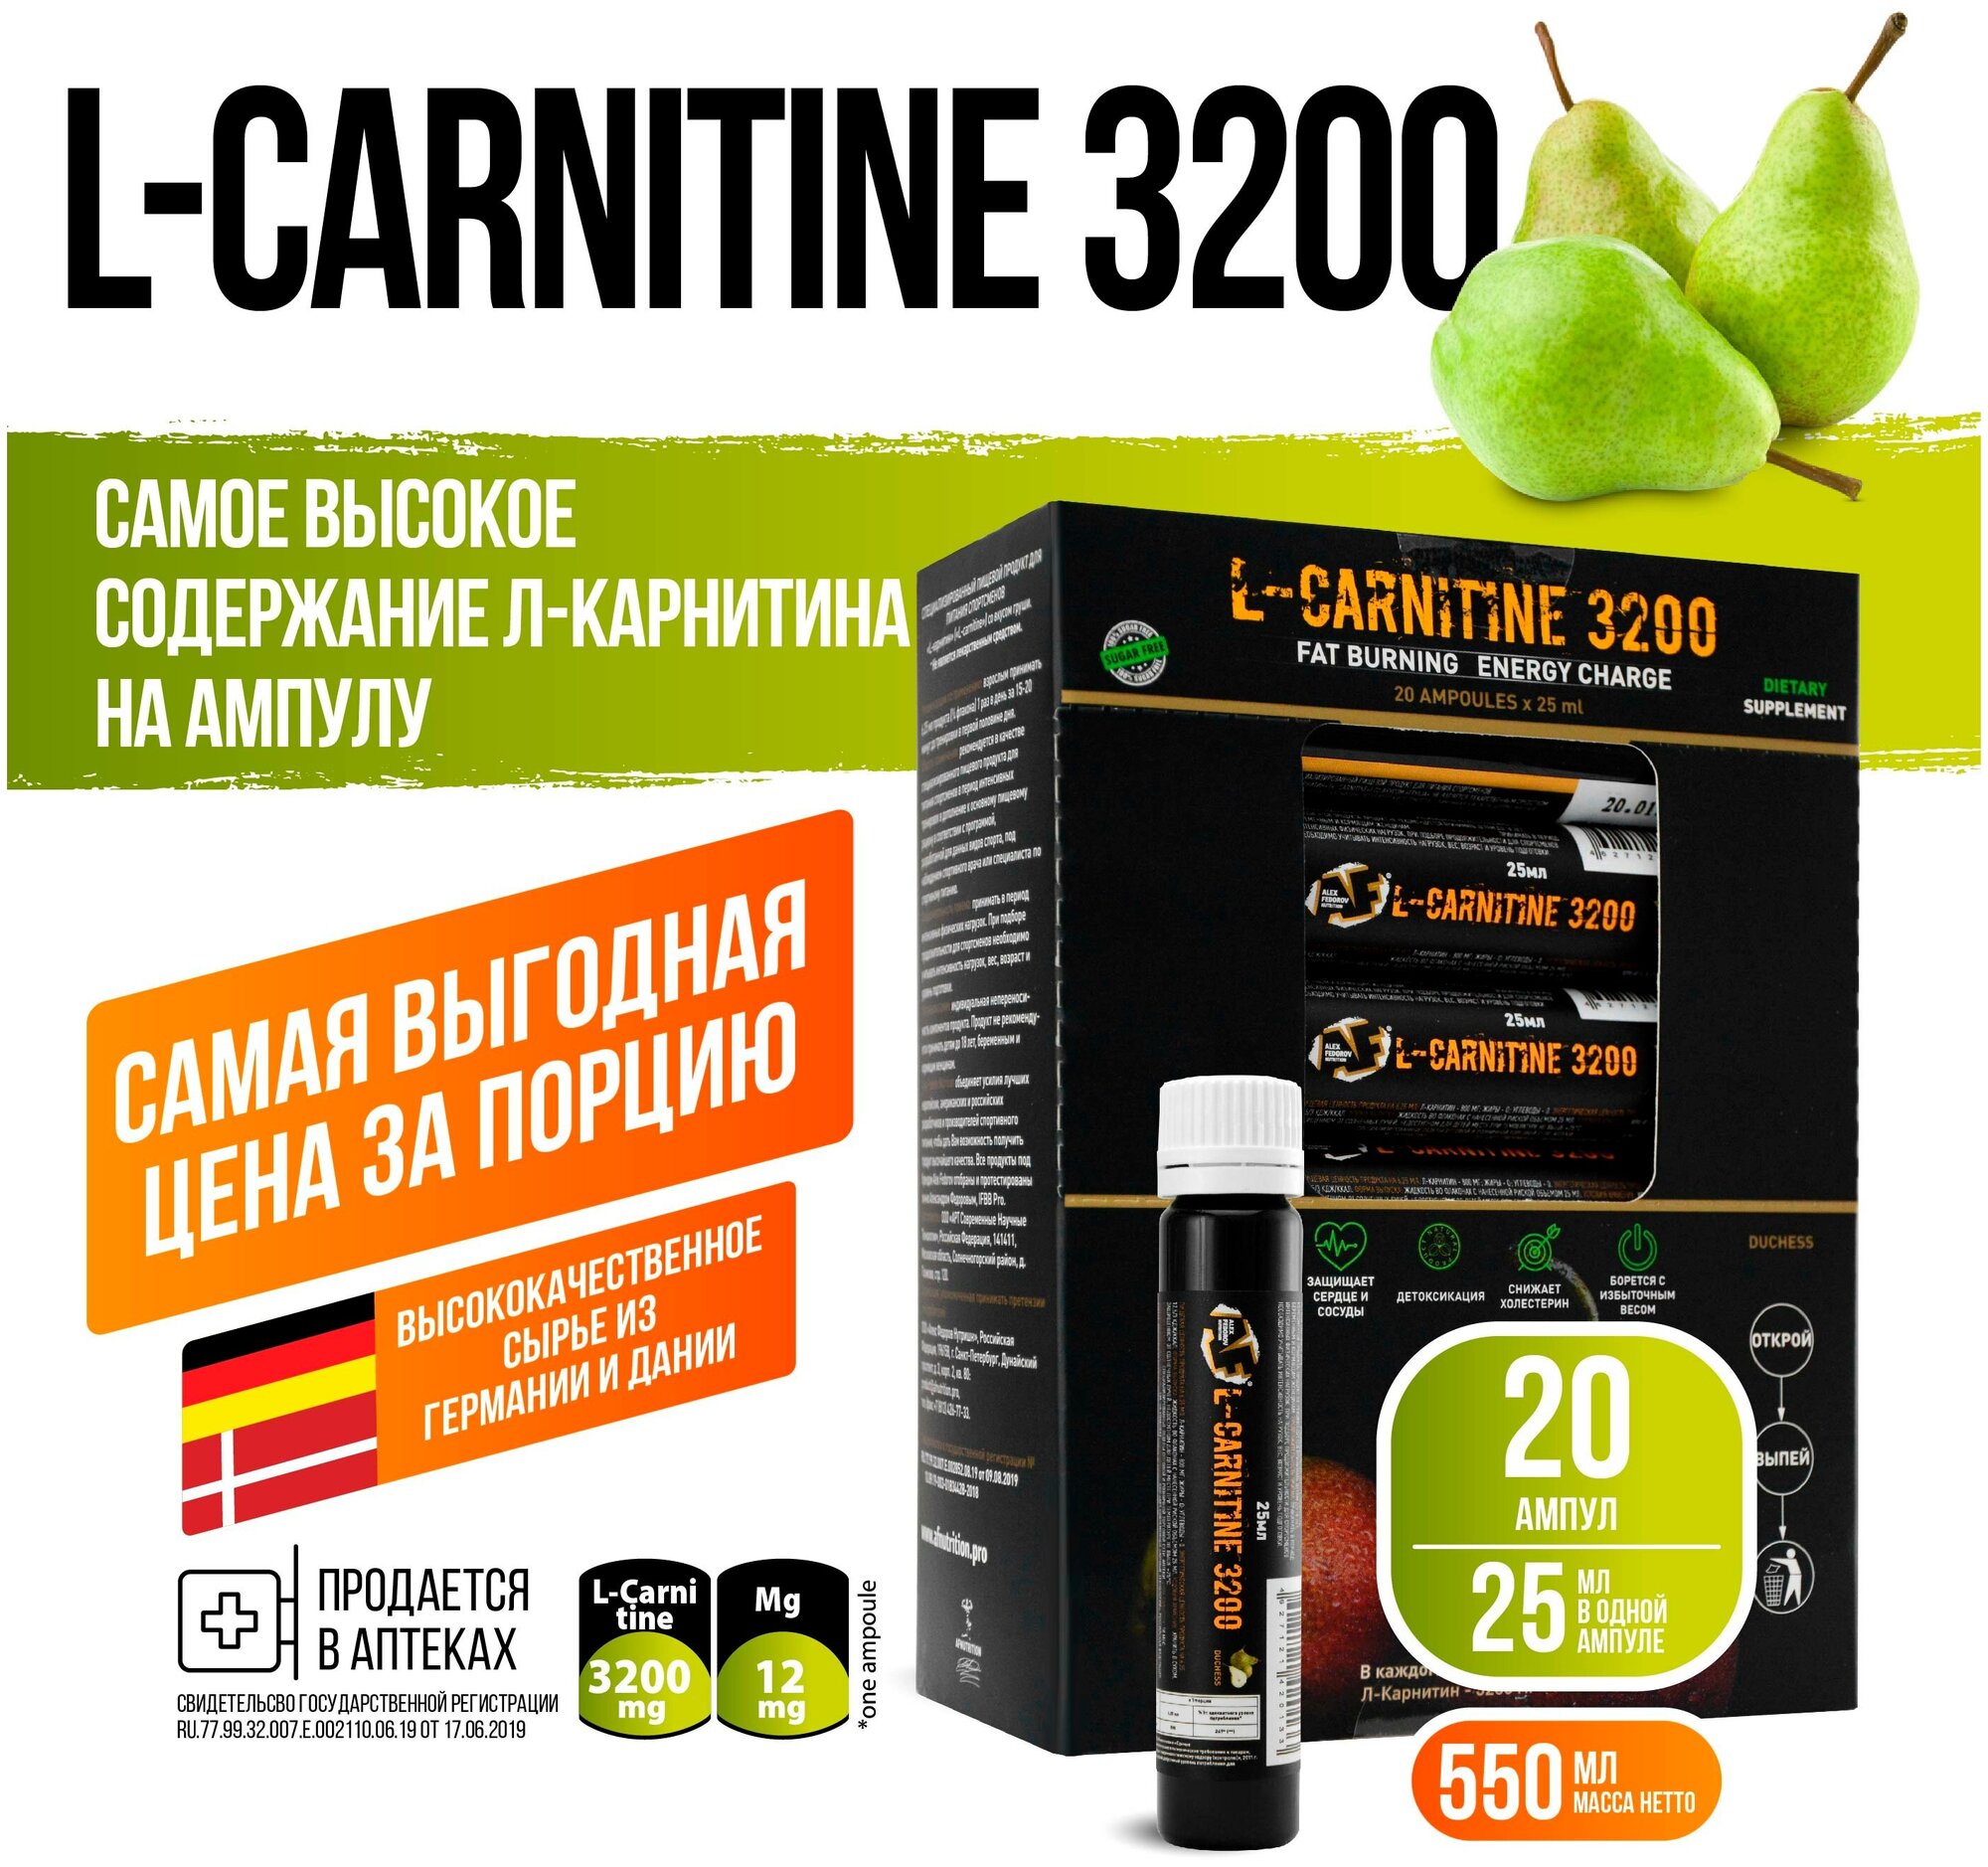 Жиросжигатель, L-Carnitine 3200, вкус груша, карнитин, Alex Fedorov Nutrition, 20 ампул по 25мл